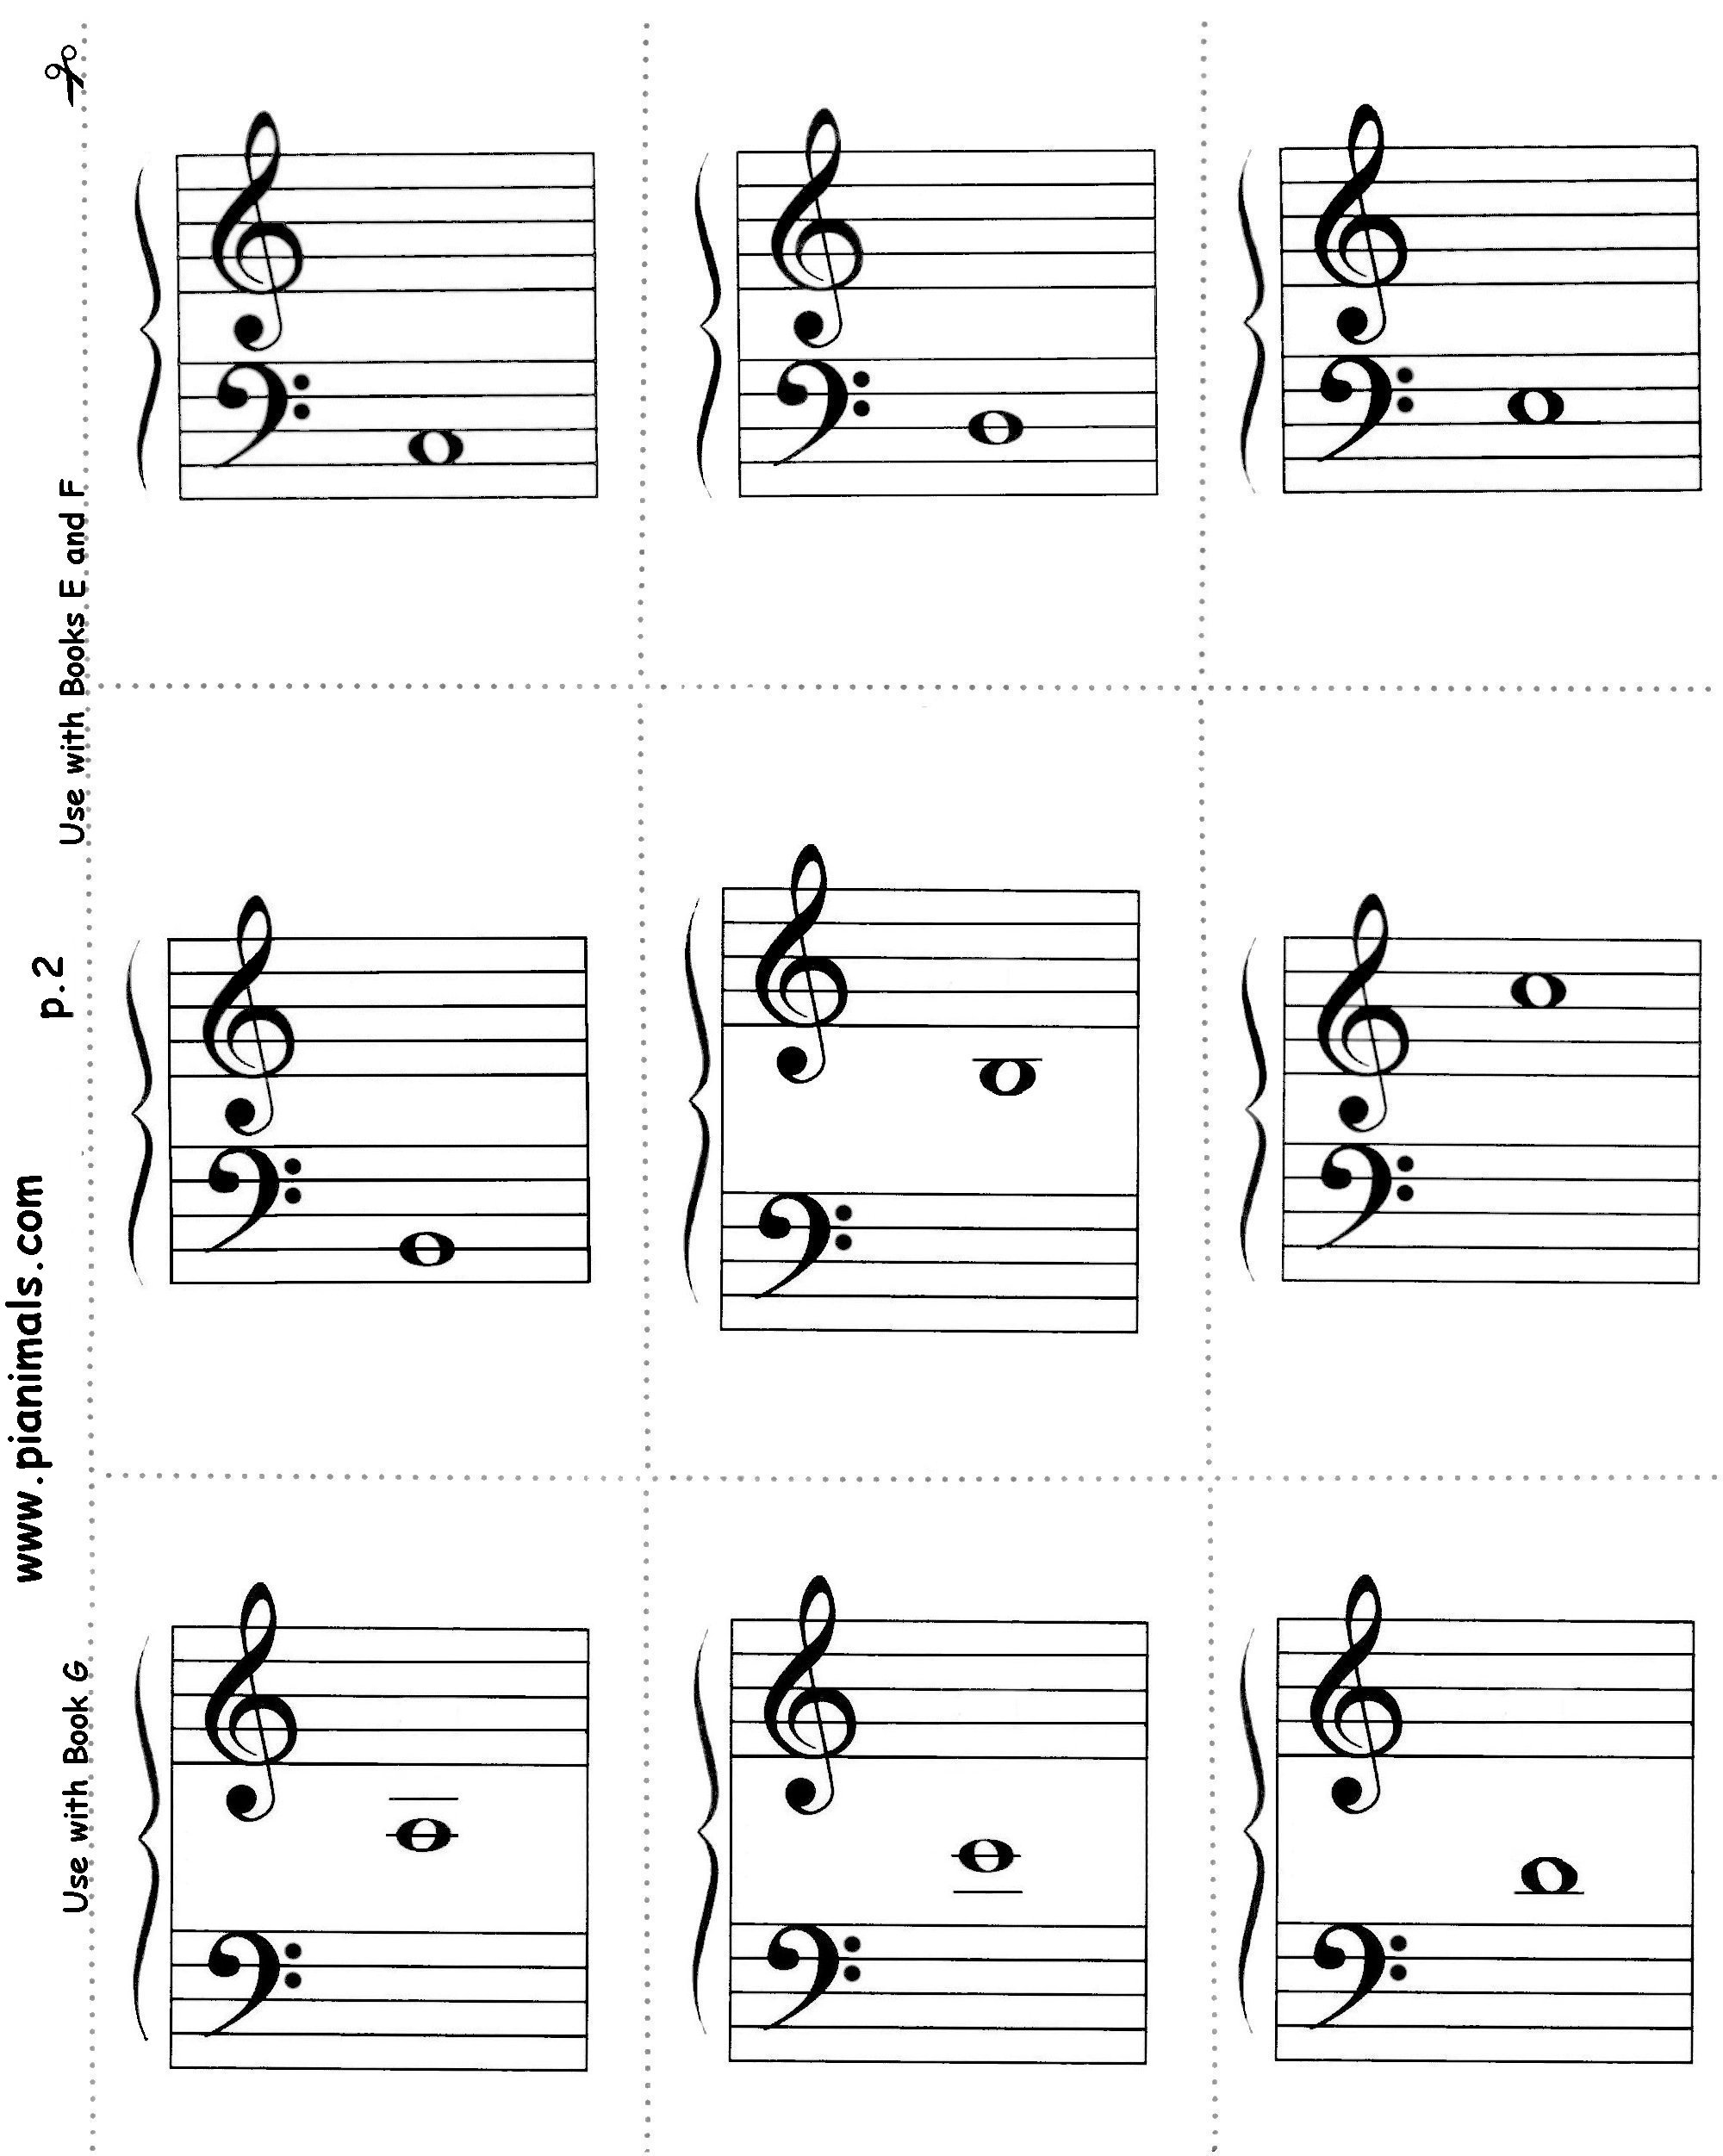 13 Best Images of Printable Music Worksheets Free Printable Music